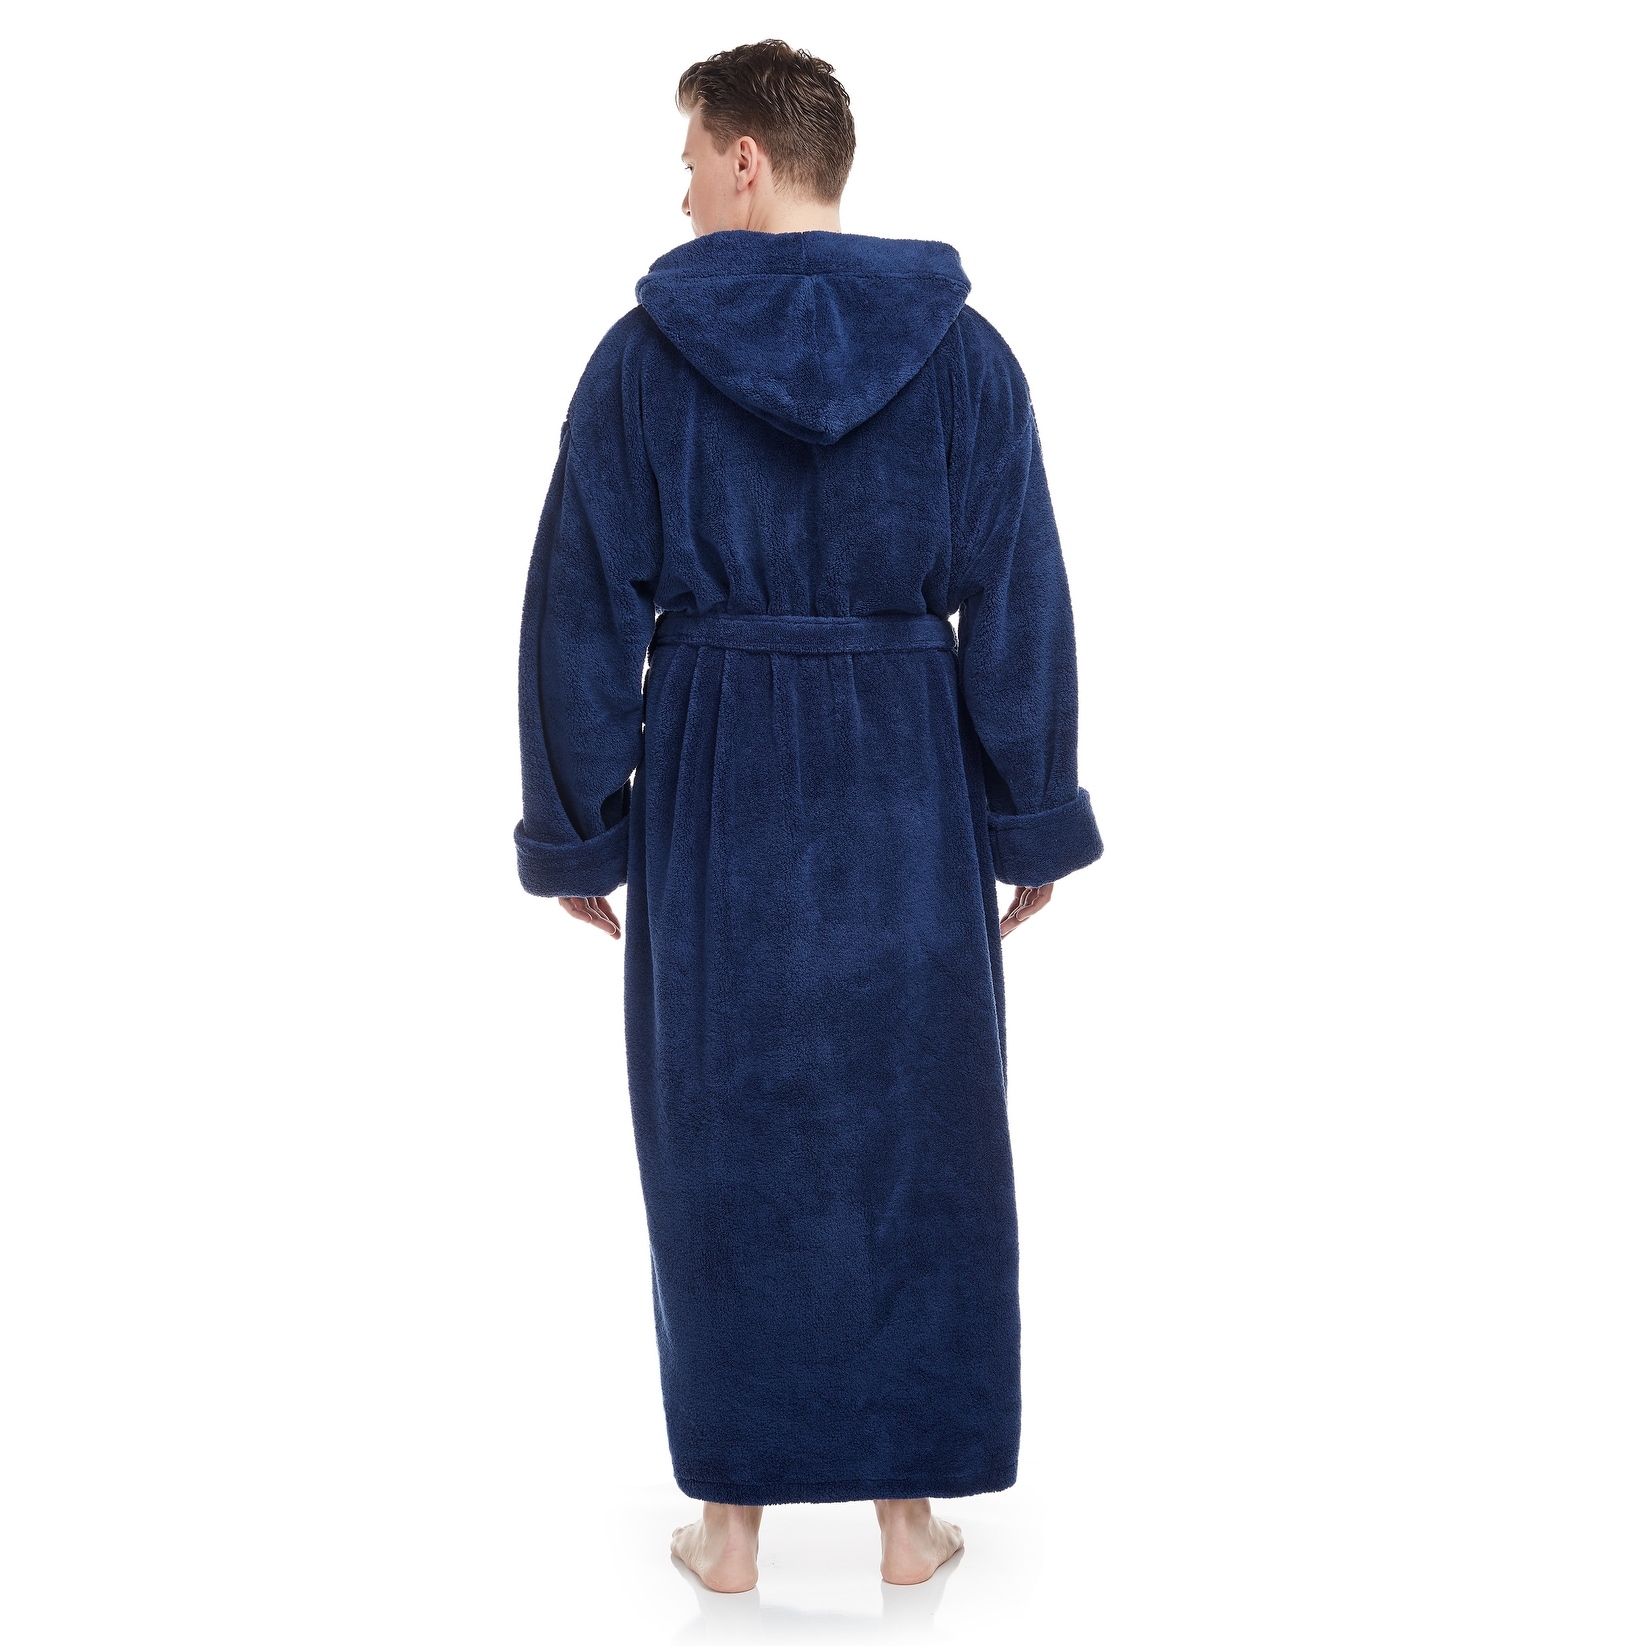 DISHANG Mens Fleece Bathrobe Soft Plush Spa Robe with Hood 